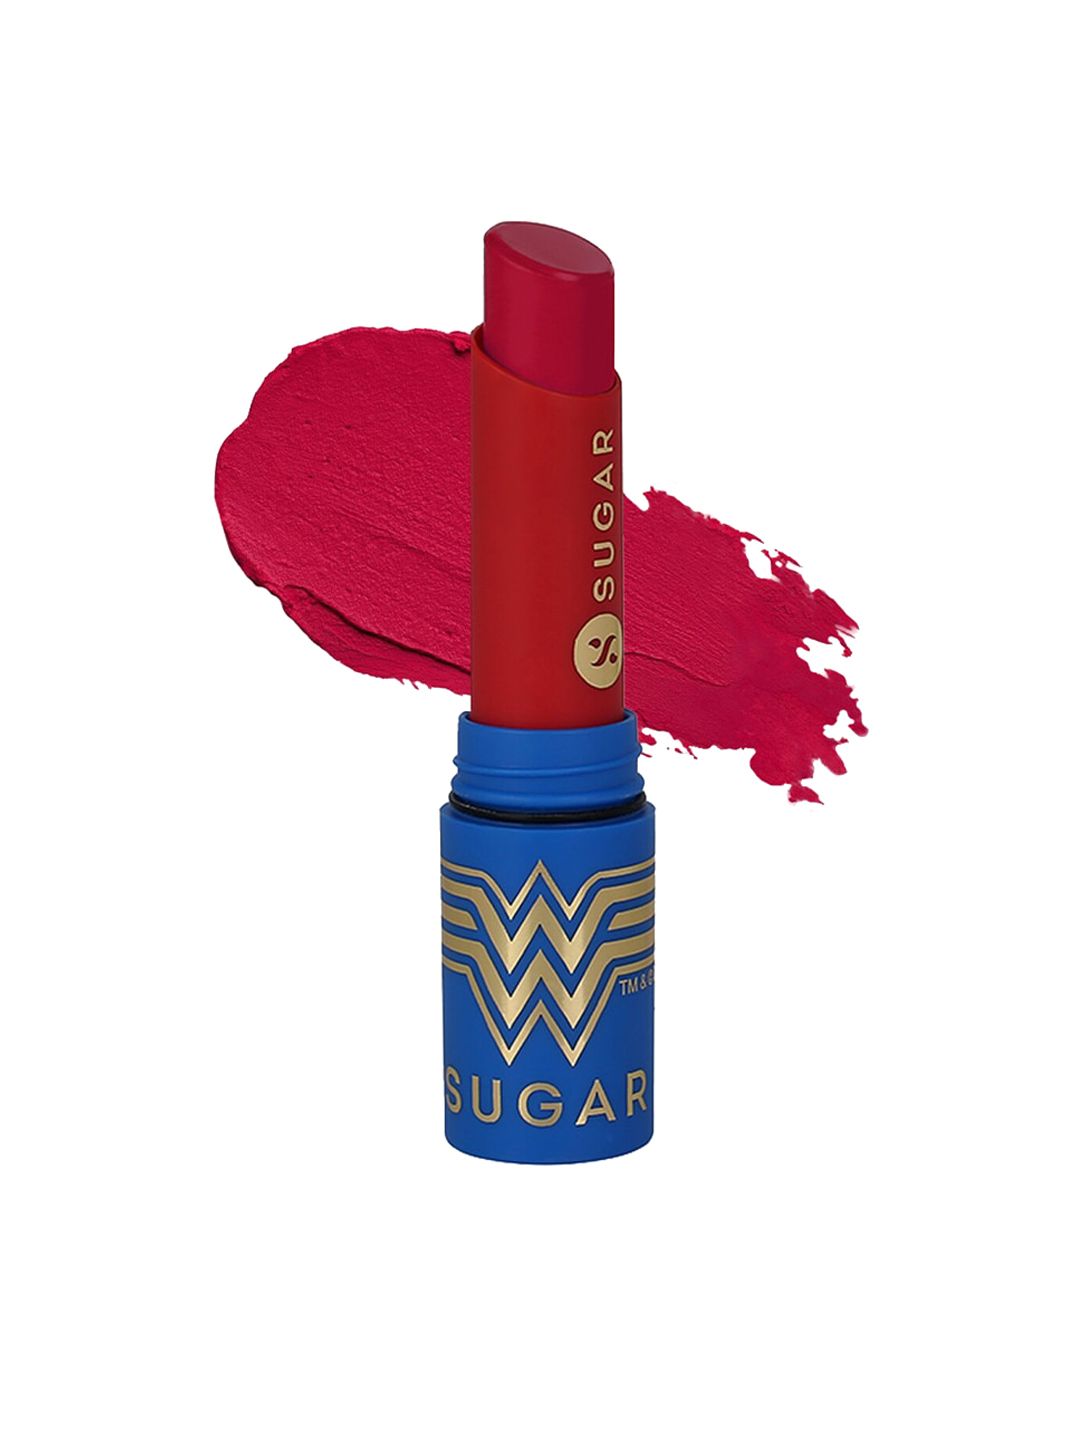 SUGAR X Wonder Woman Everlasting Matte Lipstick - 05 Sass Price in India